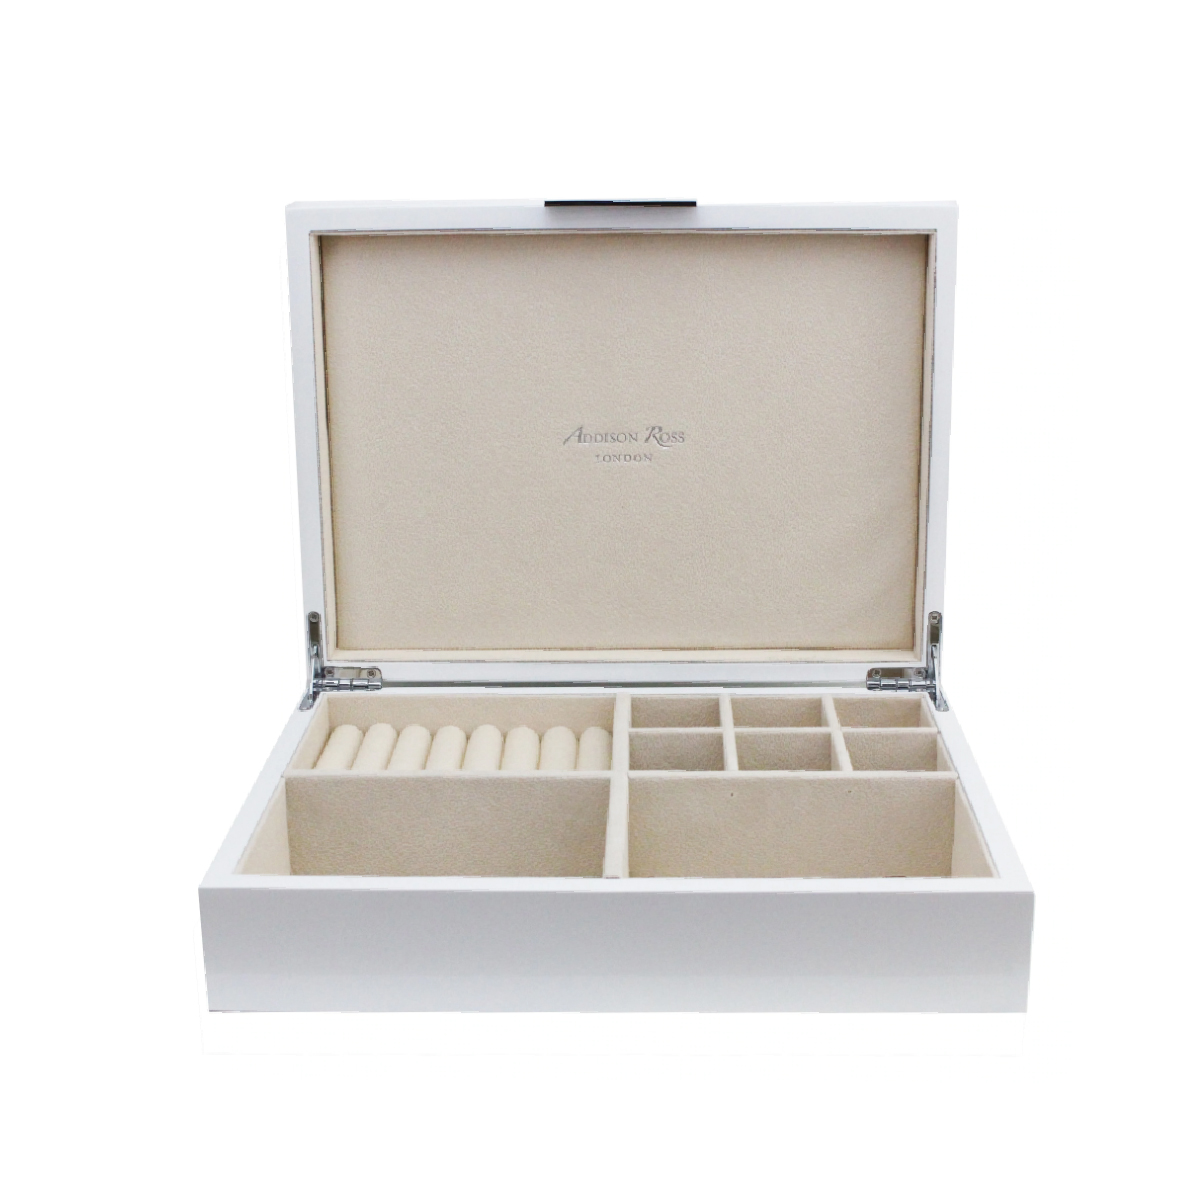 Addison Ross - White & Silver Jewelry Box